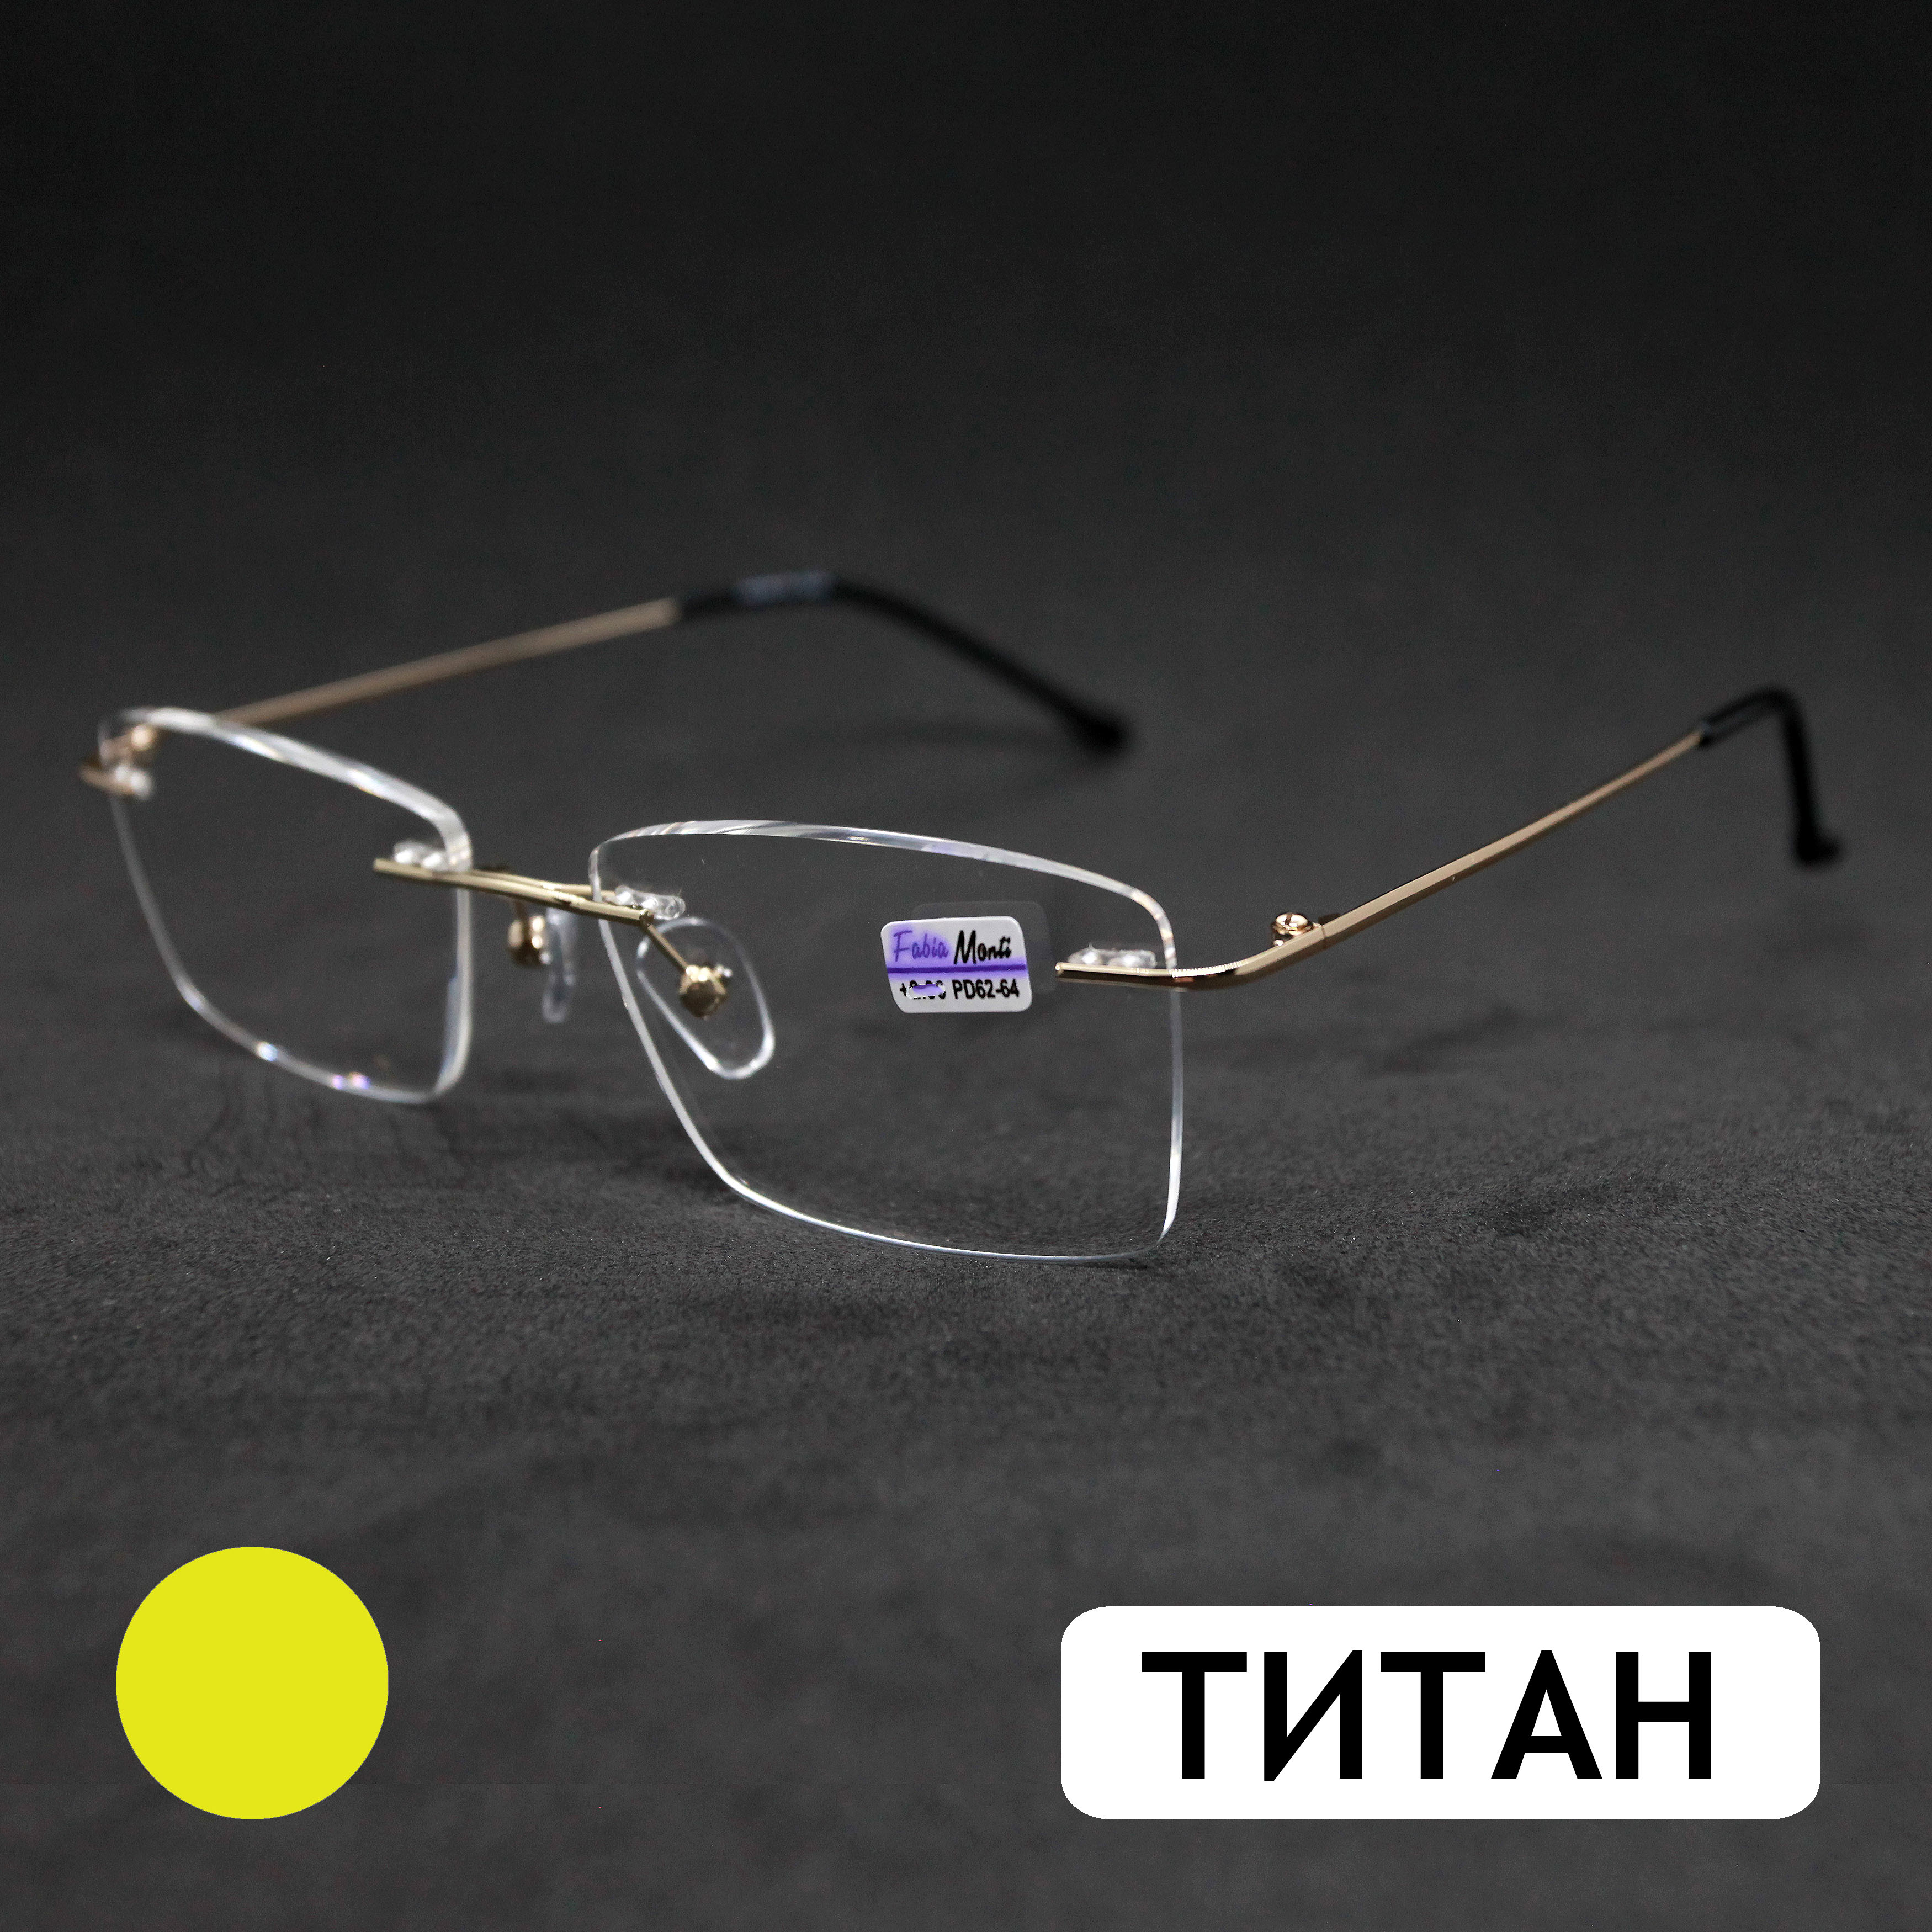 Безободковые очки FM 8959 -2.25, без футляра, оправа титан, золотые, РЦ 62-64